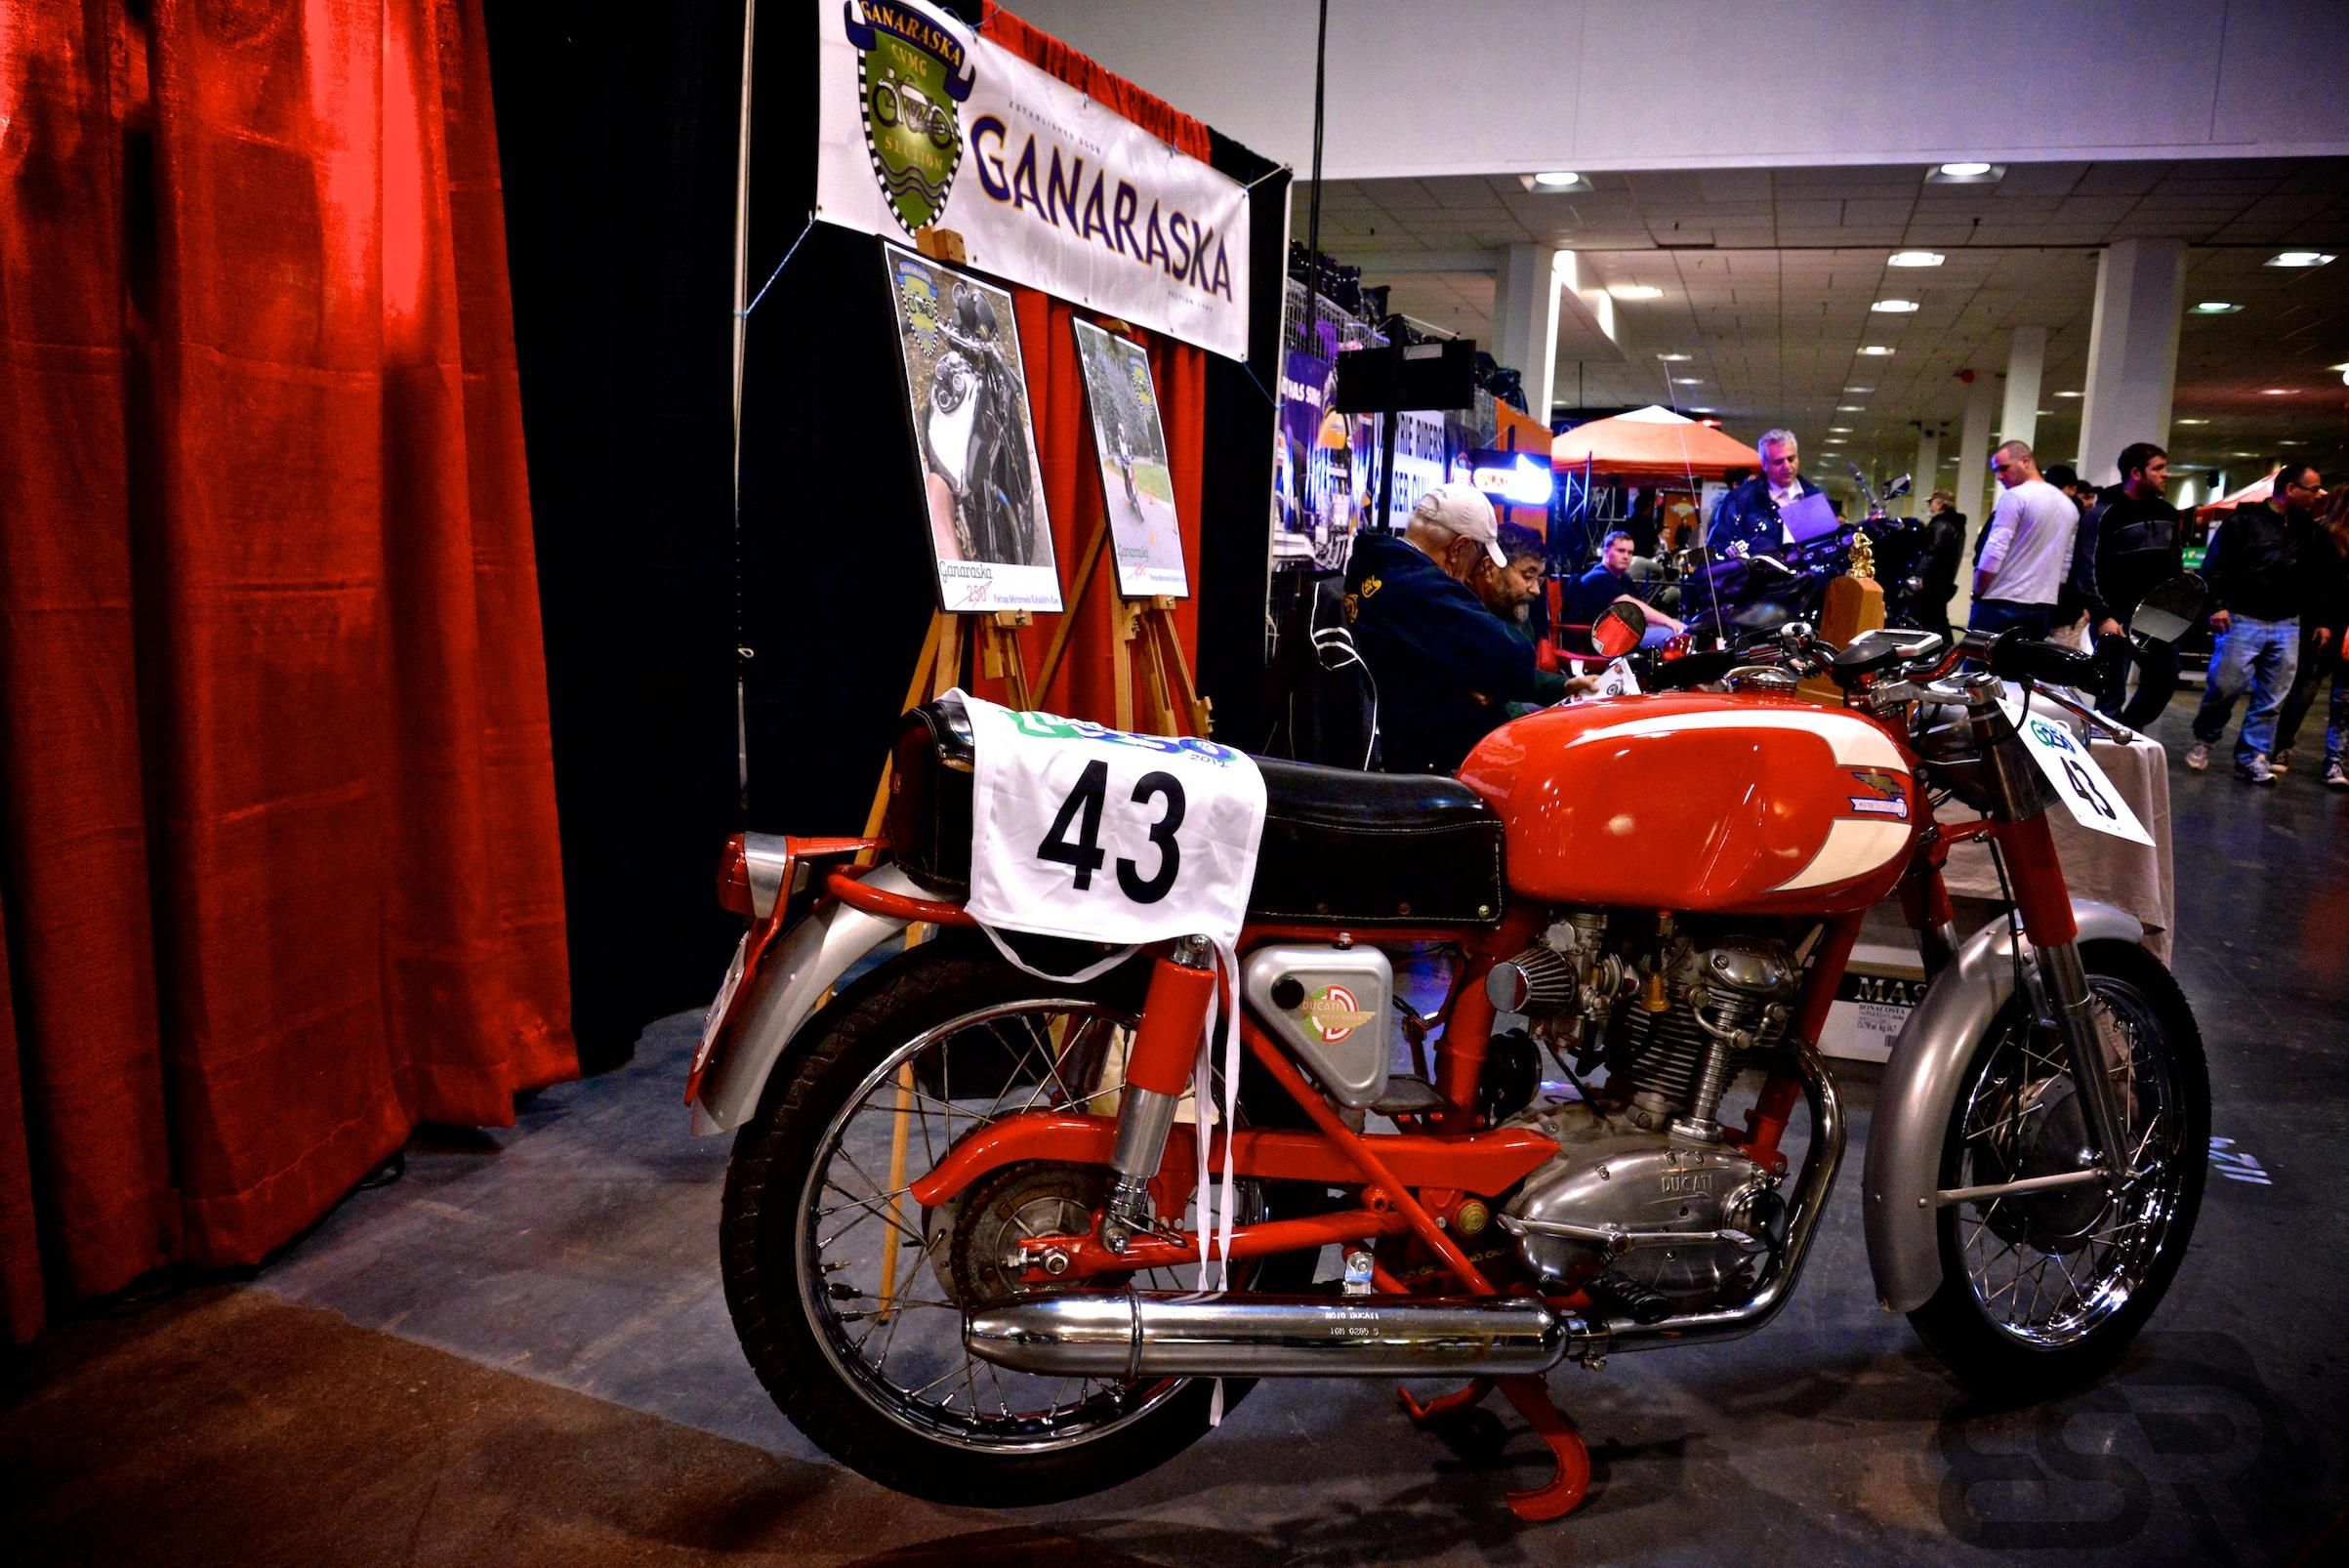 Ganaraska and the vintage Ducati TSMS13